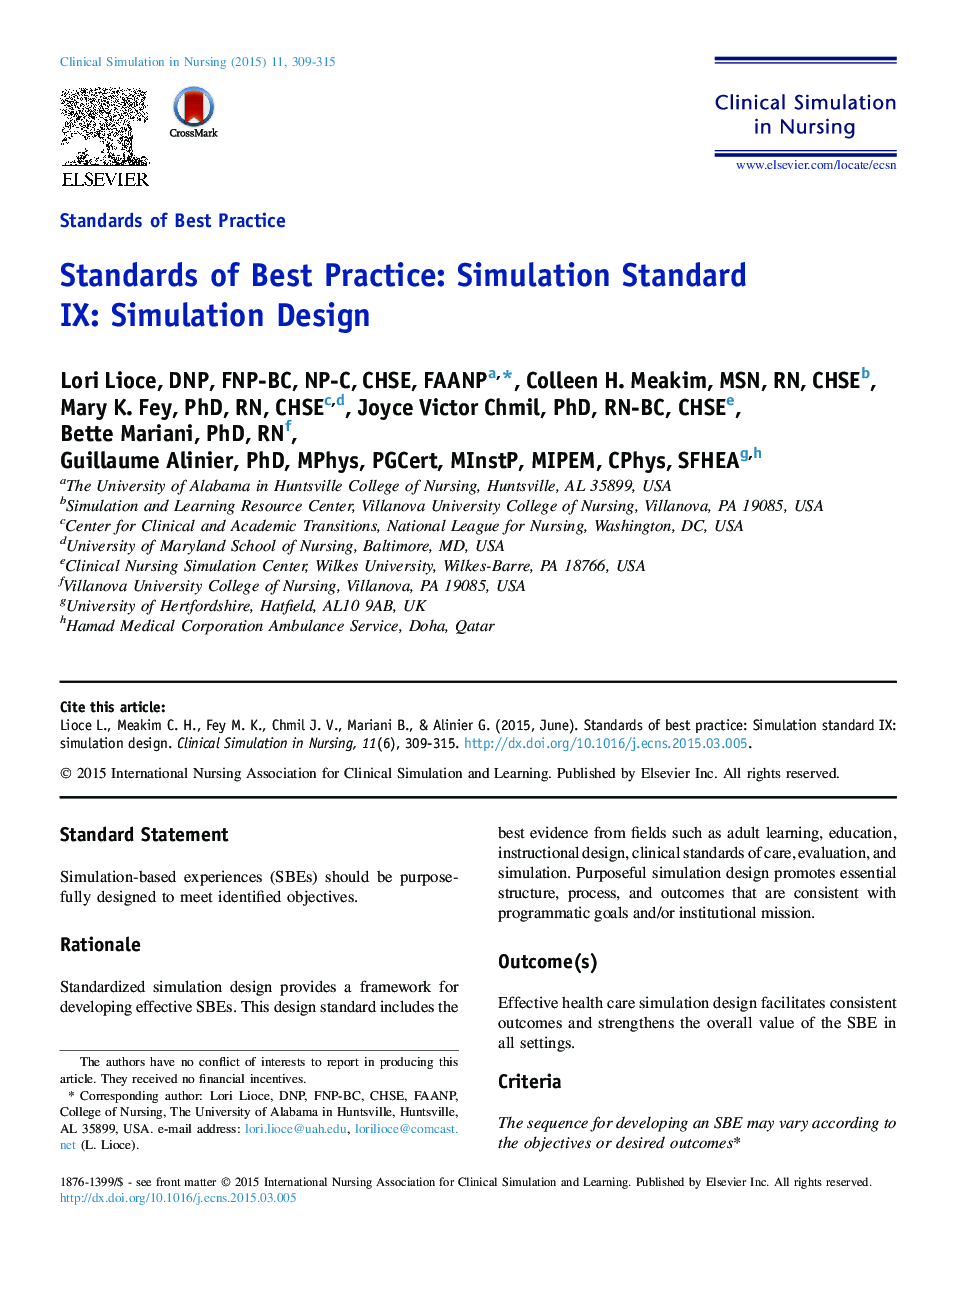 Standards of Best Practice: Simulation Standard IX: Simulation Design 